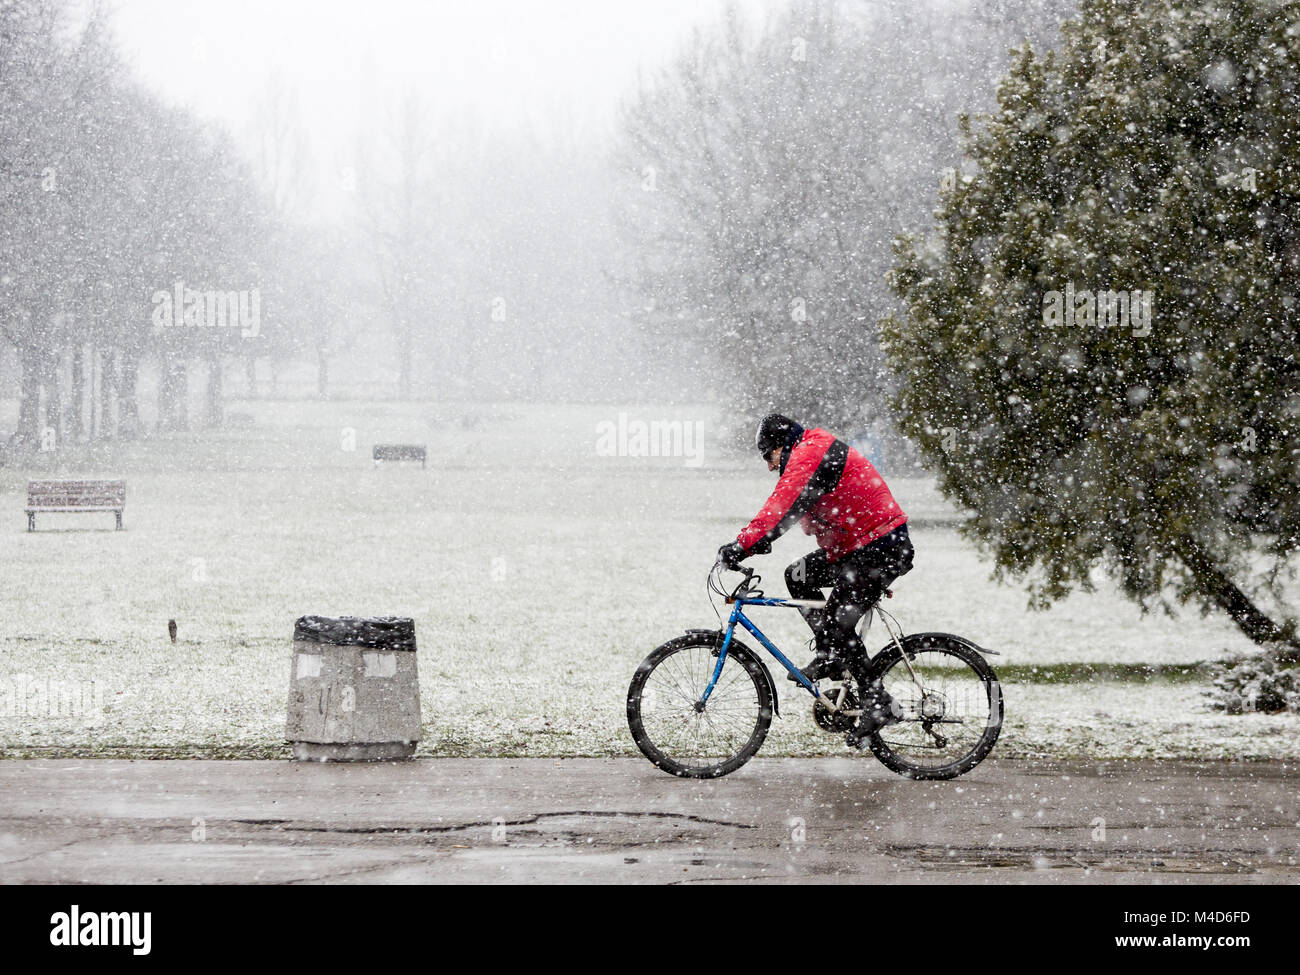 Biking in the park snow snowing Stock Photo